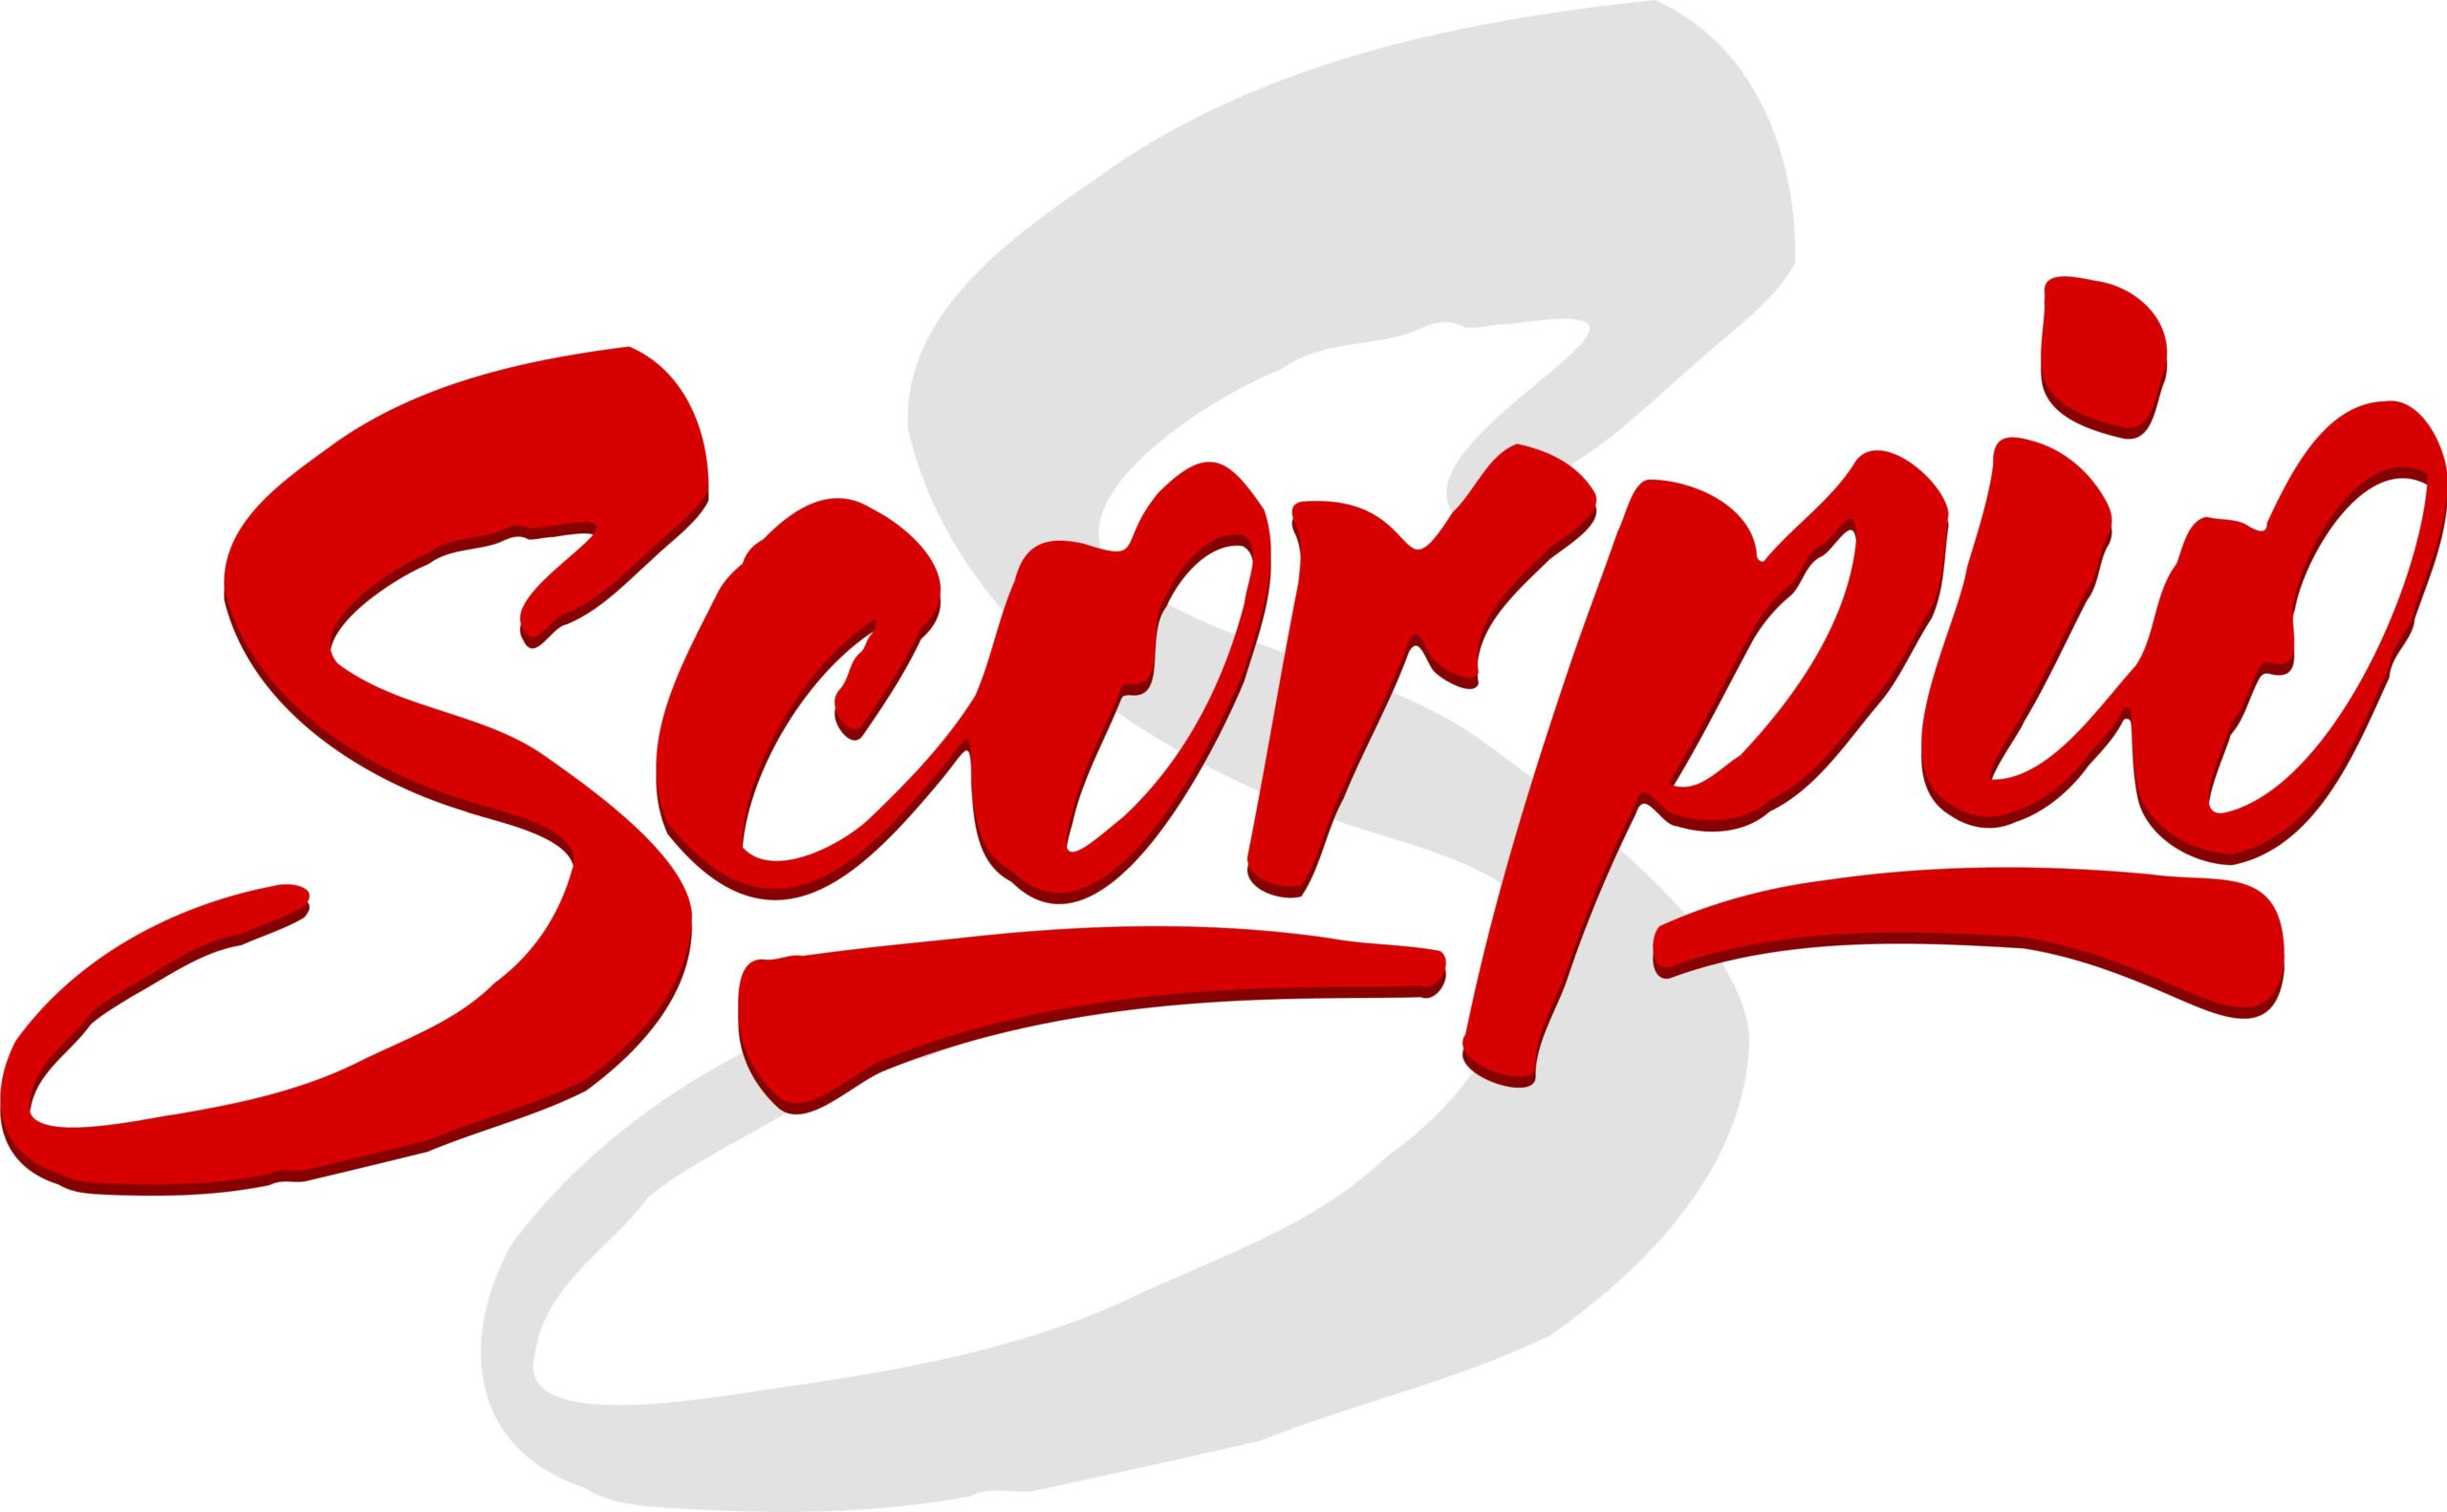 Scorpio Productions